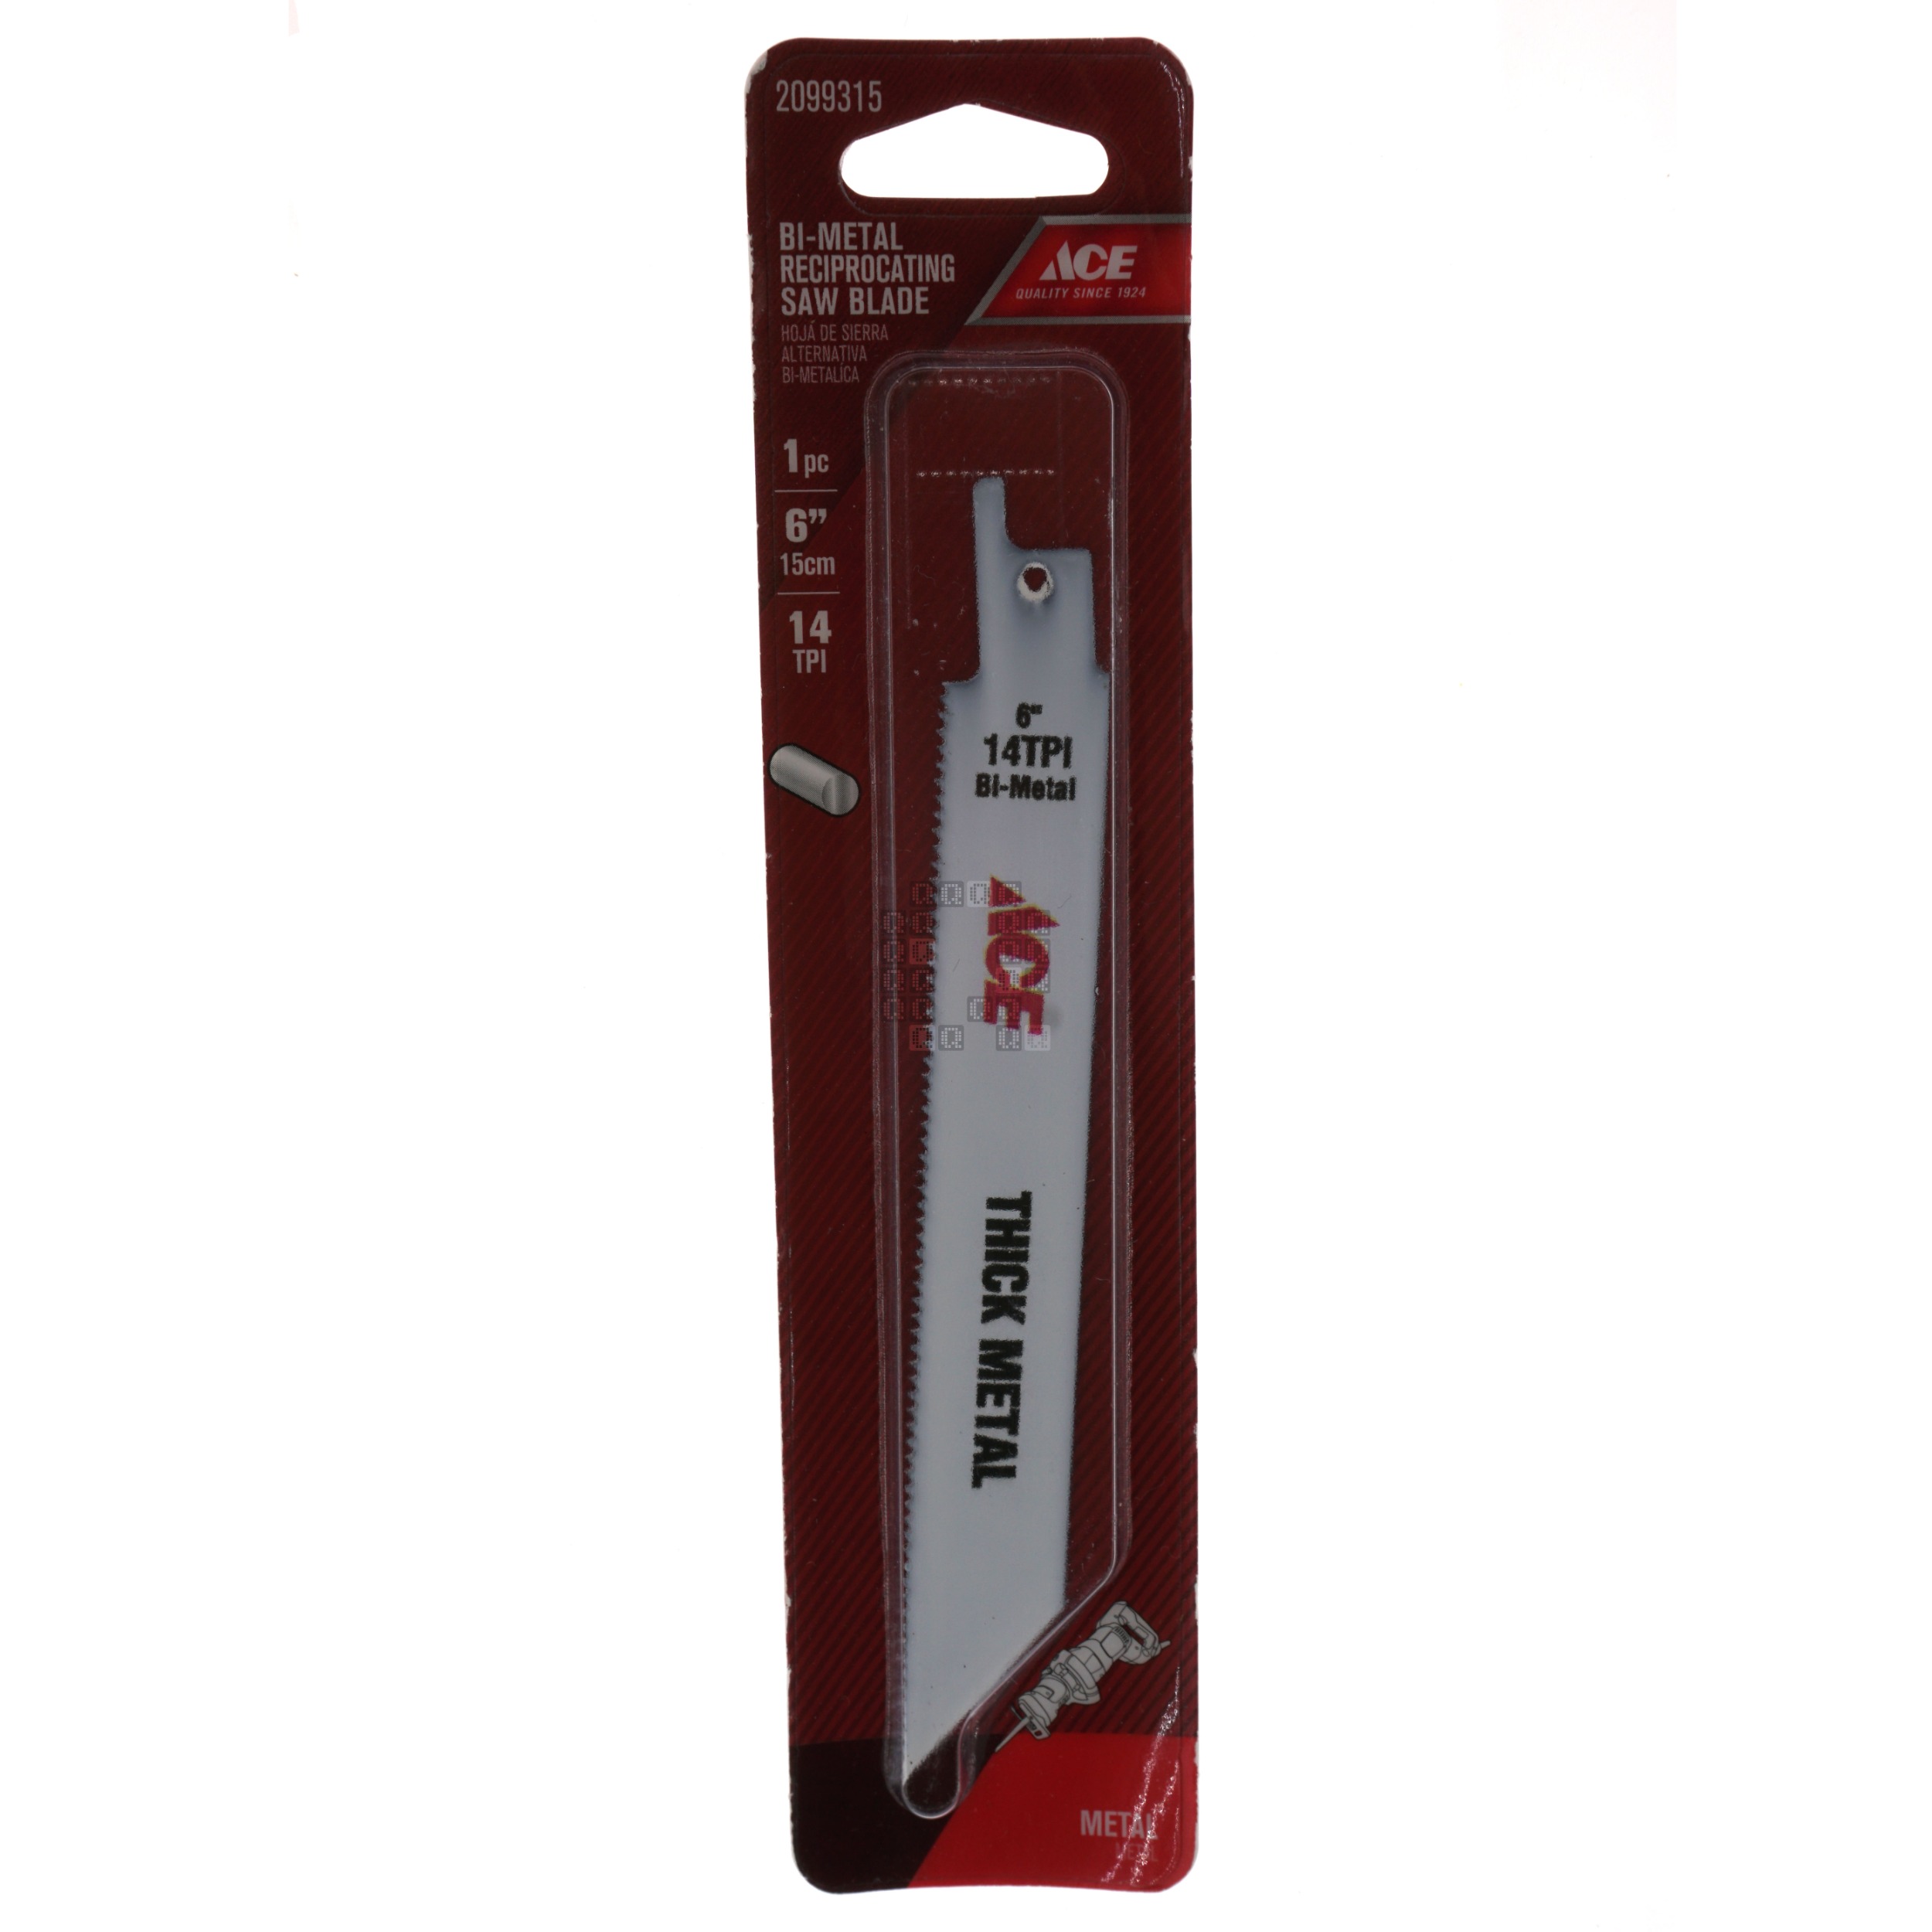 ACE Hardware 2099315 Bi-Metal 6" Long 14TPI Thick Metal Reciprocating Saw Blade